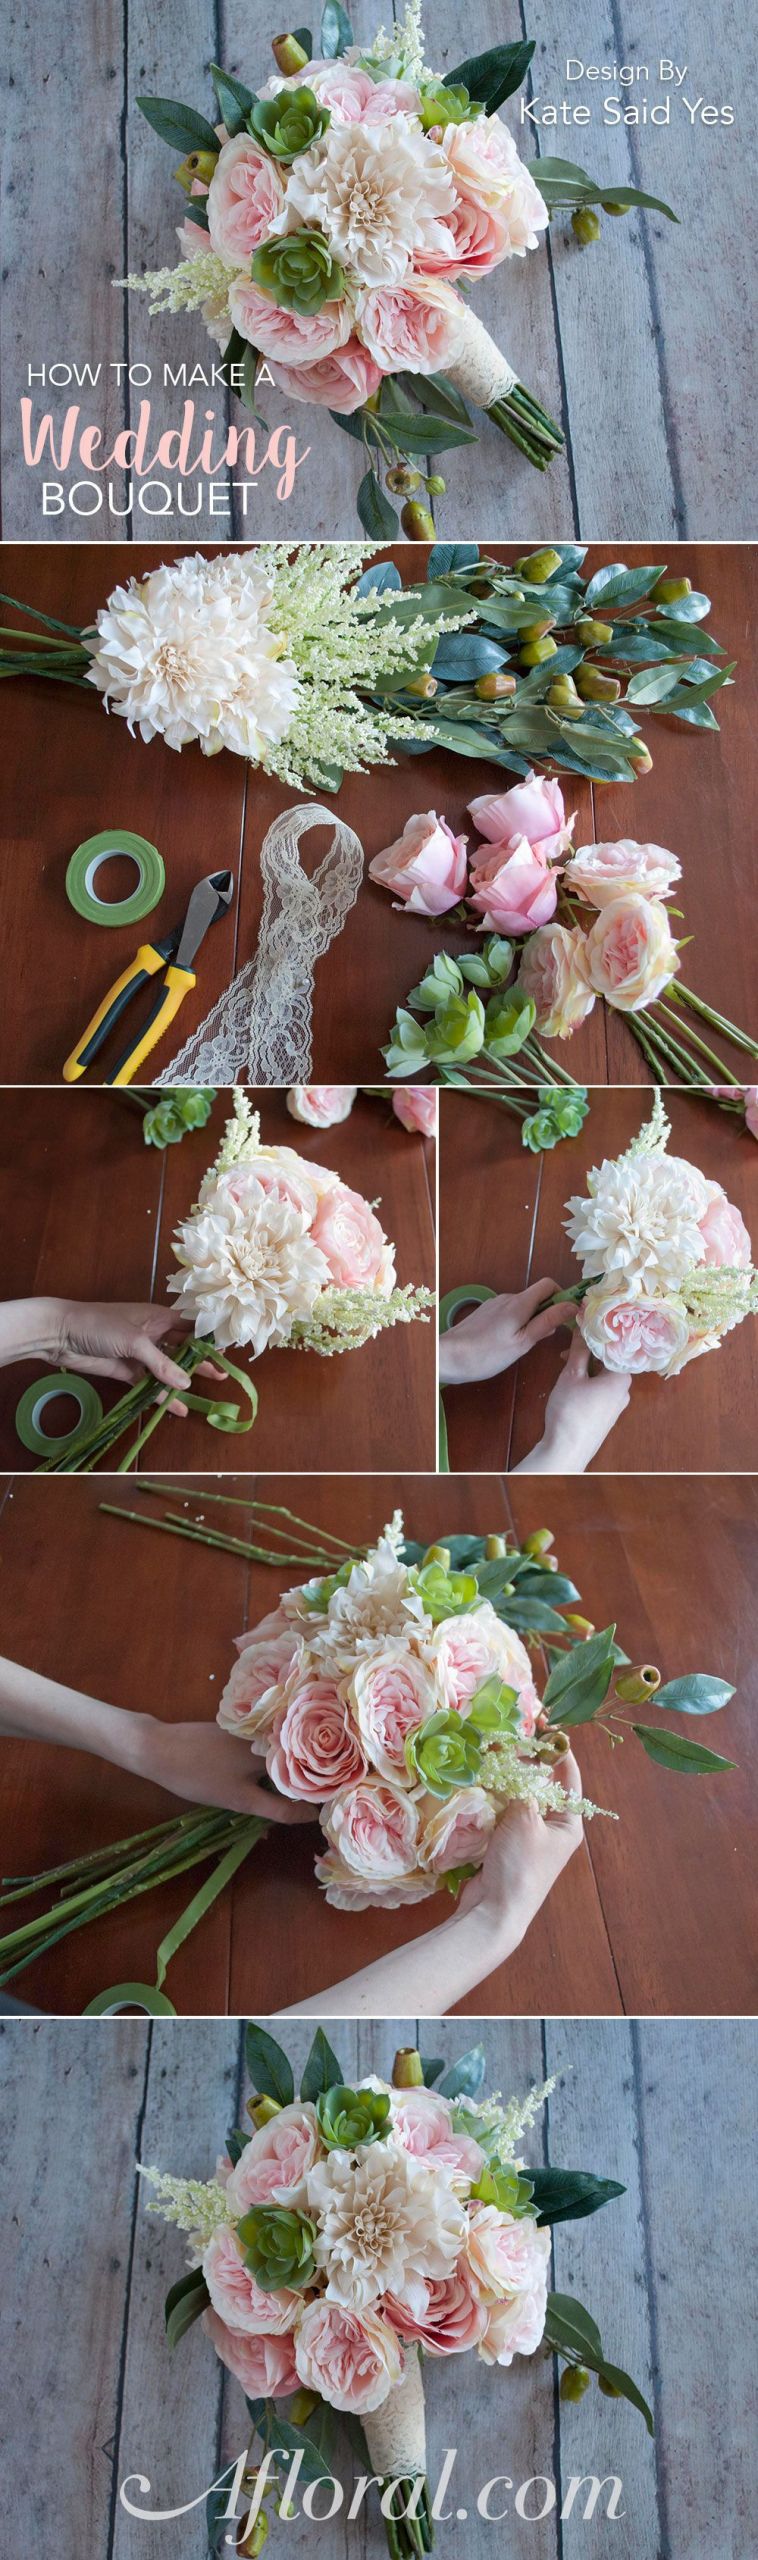 DIY Wedding Bouquet
 How To Make A Wedding Bouquet